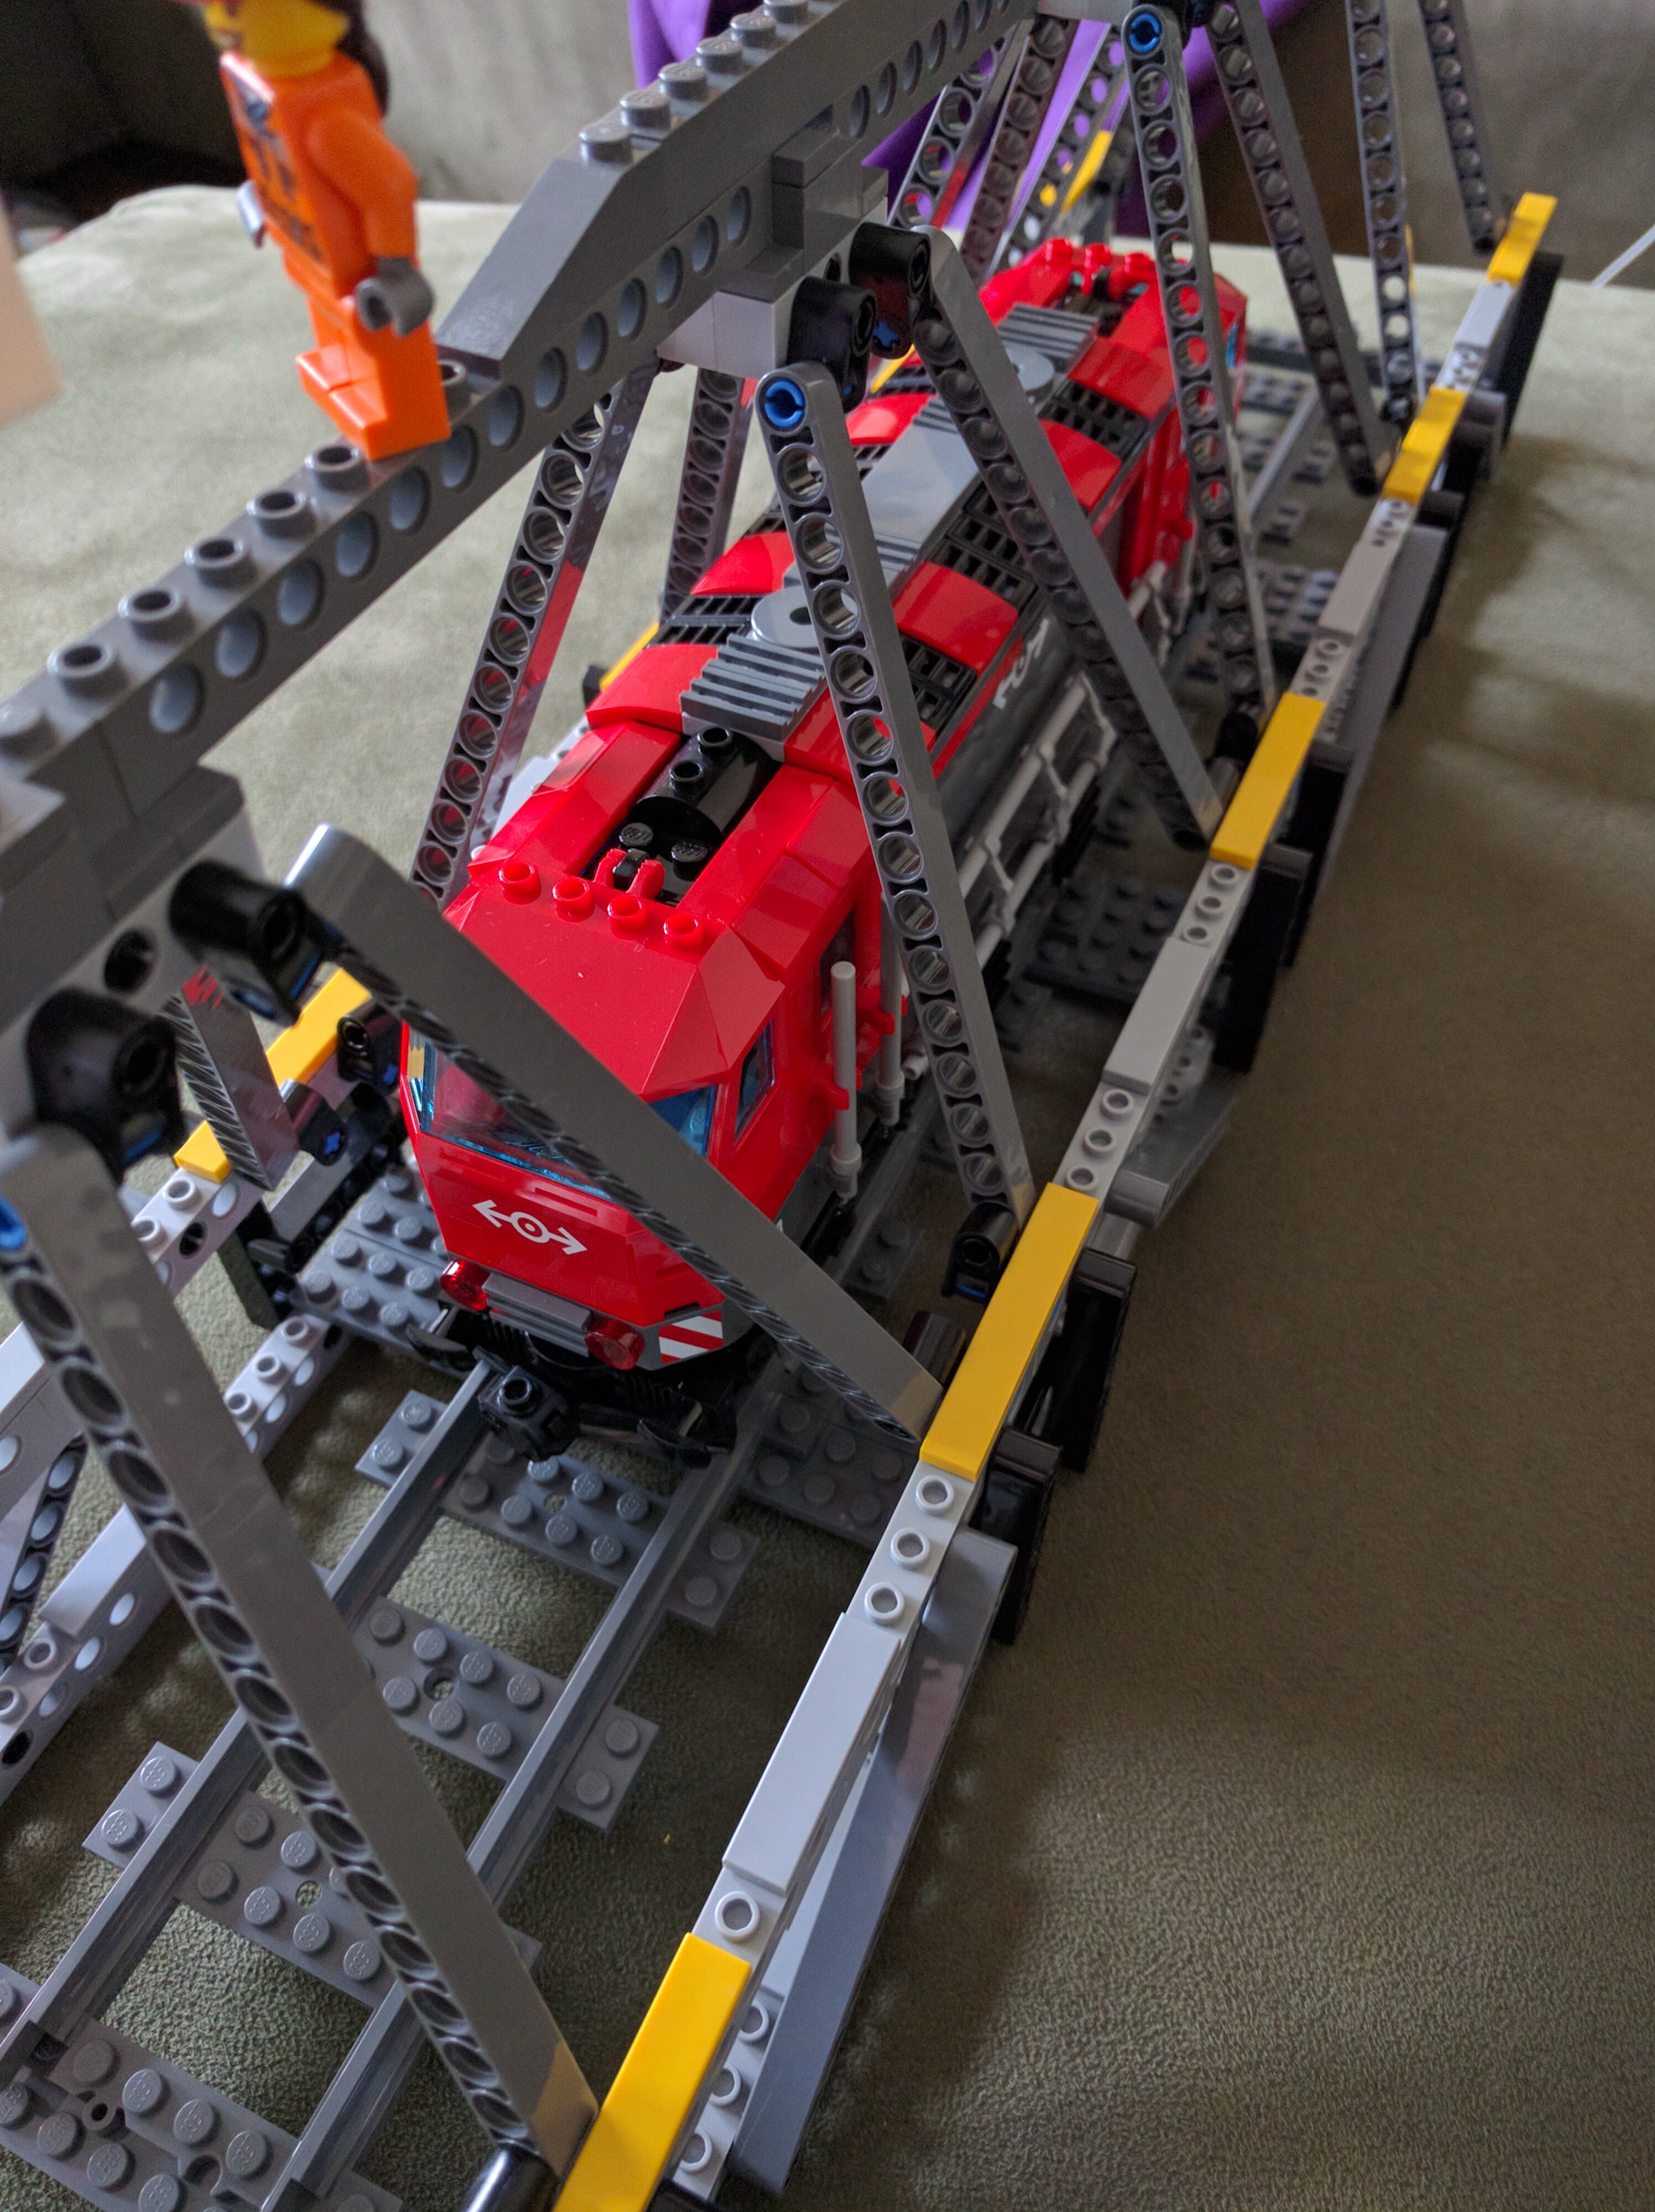 Shot of the LEGO bridge.